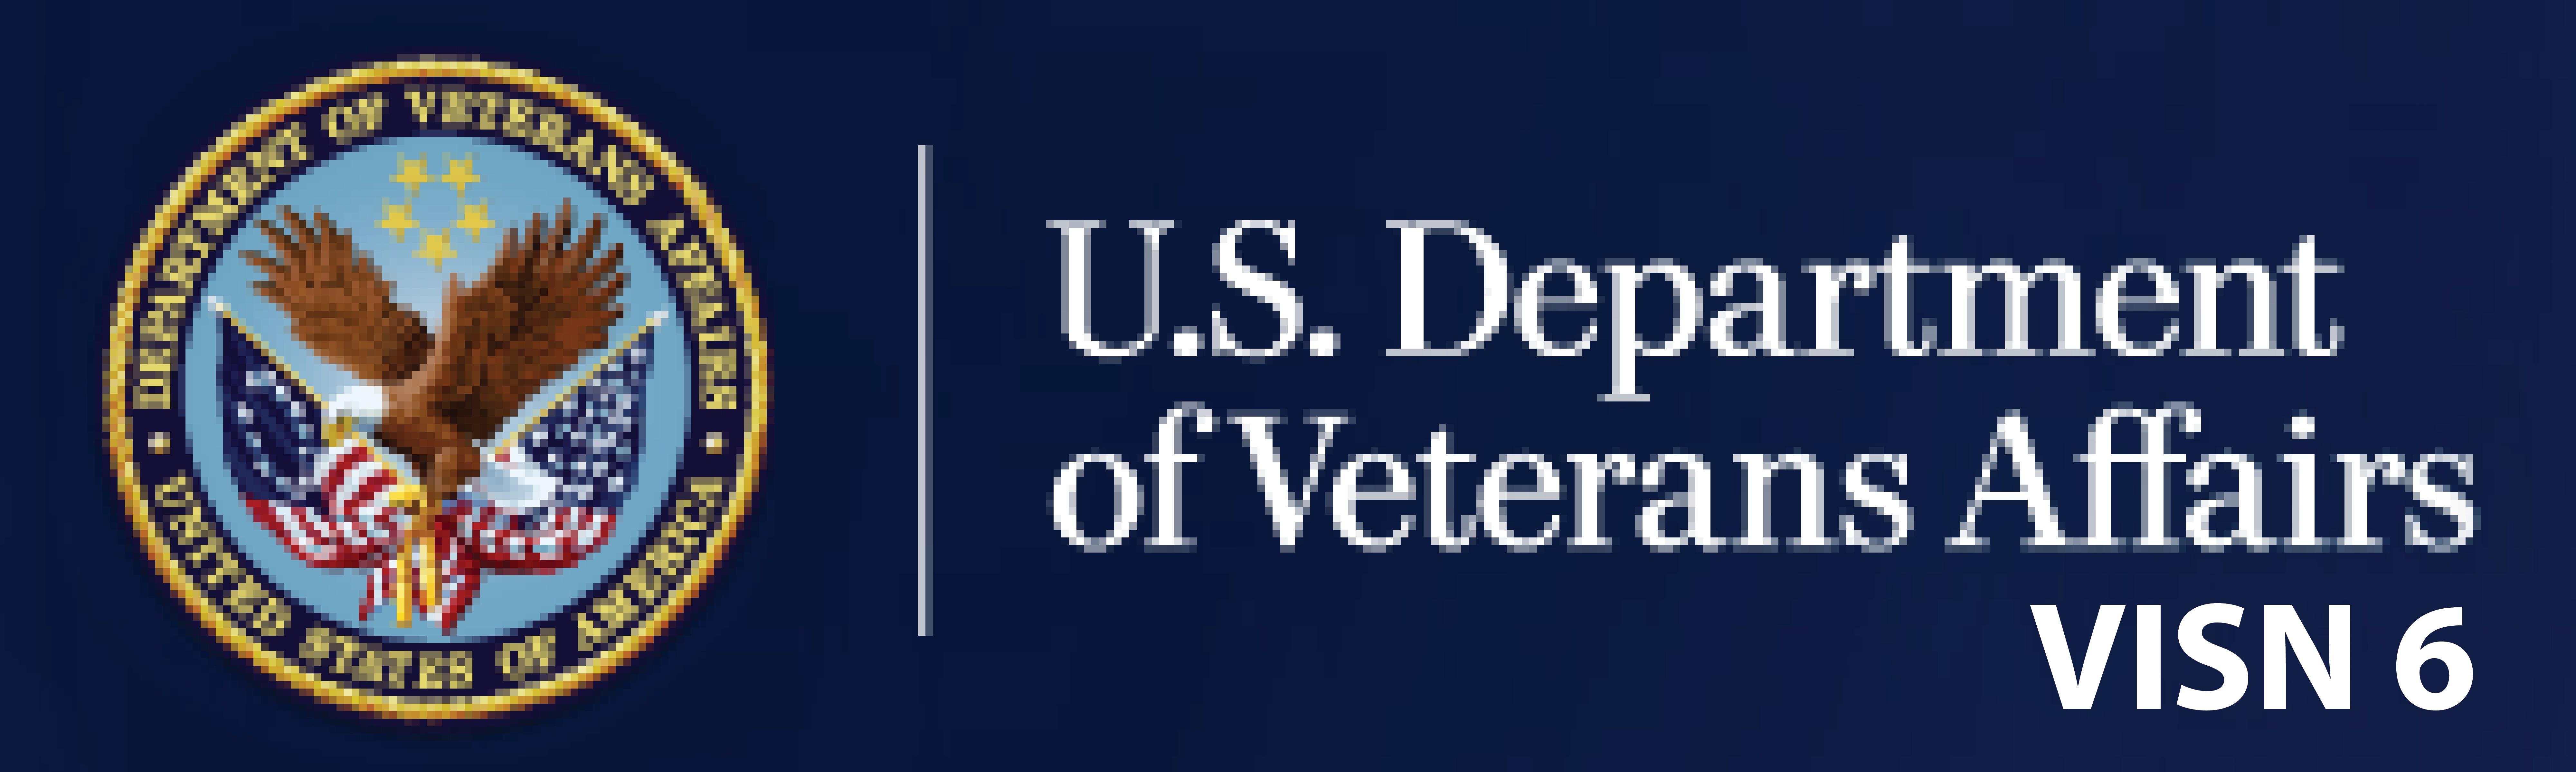 U.S. Department of Veterans Affairs Logo: VISN 6